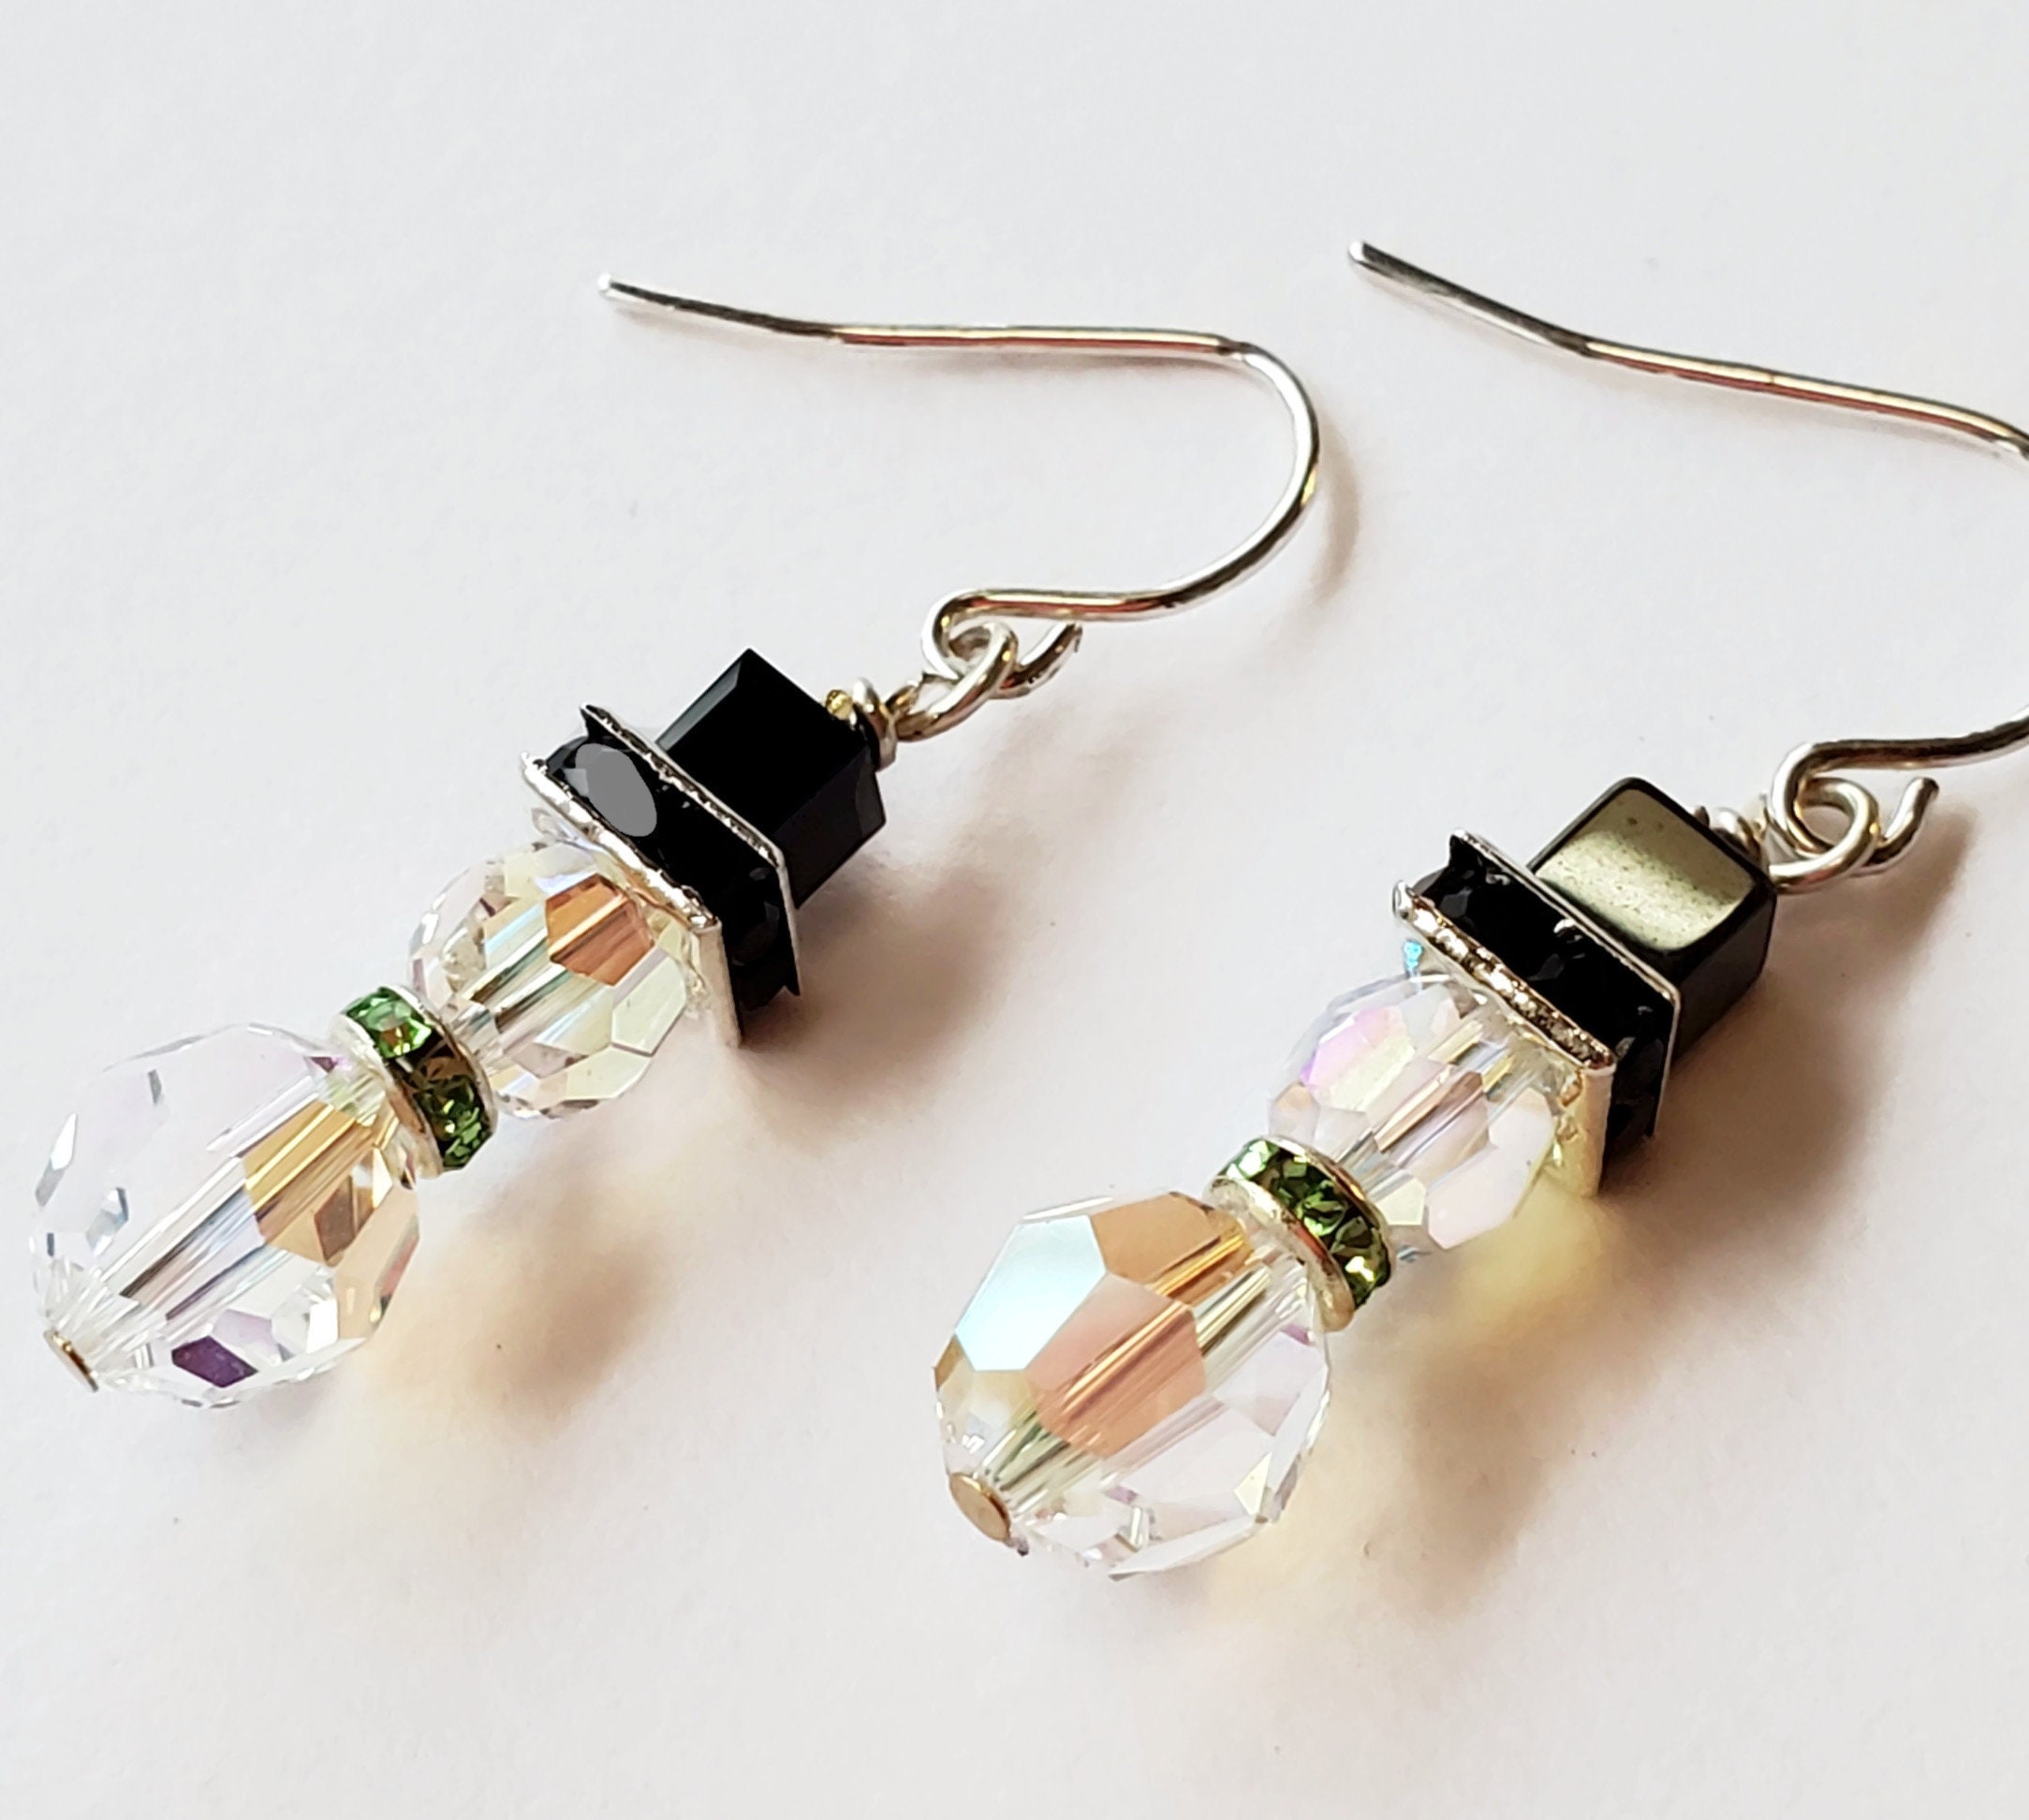 Christmas earrings, Snowman earrings, Swarovski crystal earrings, Sterling  plated earrings · NY6 Design